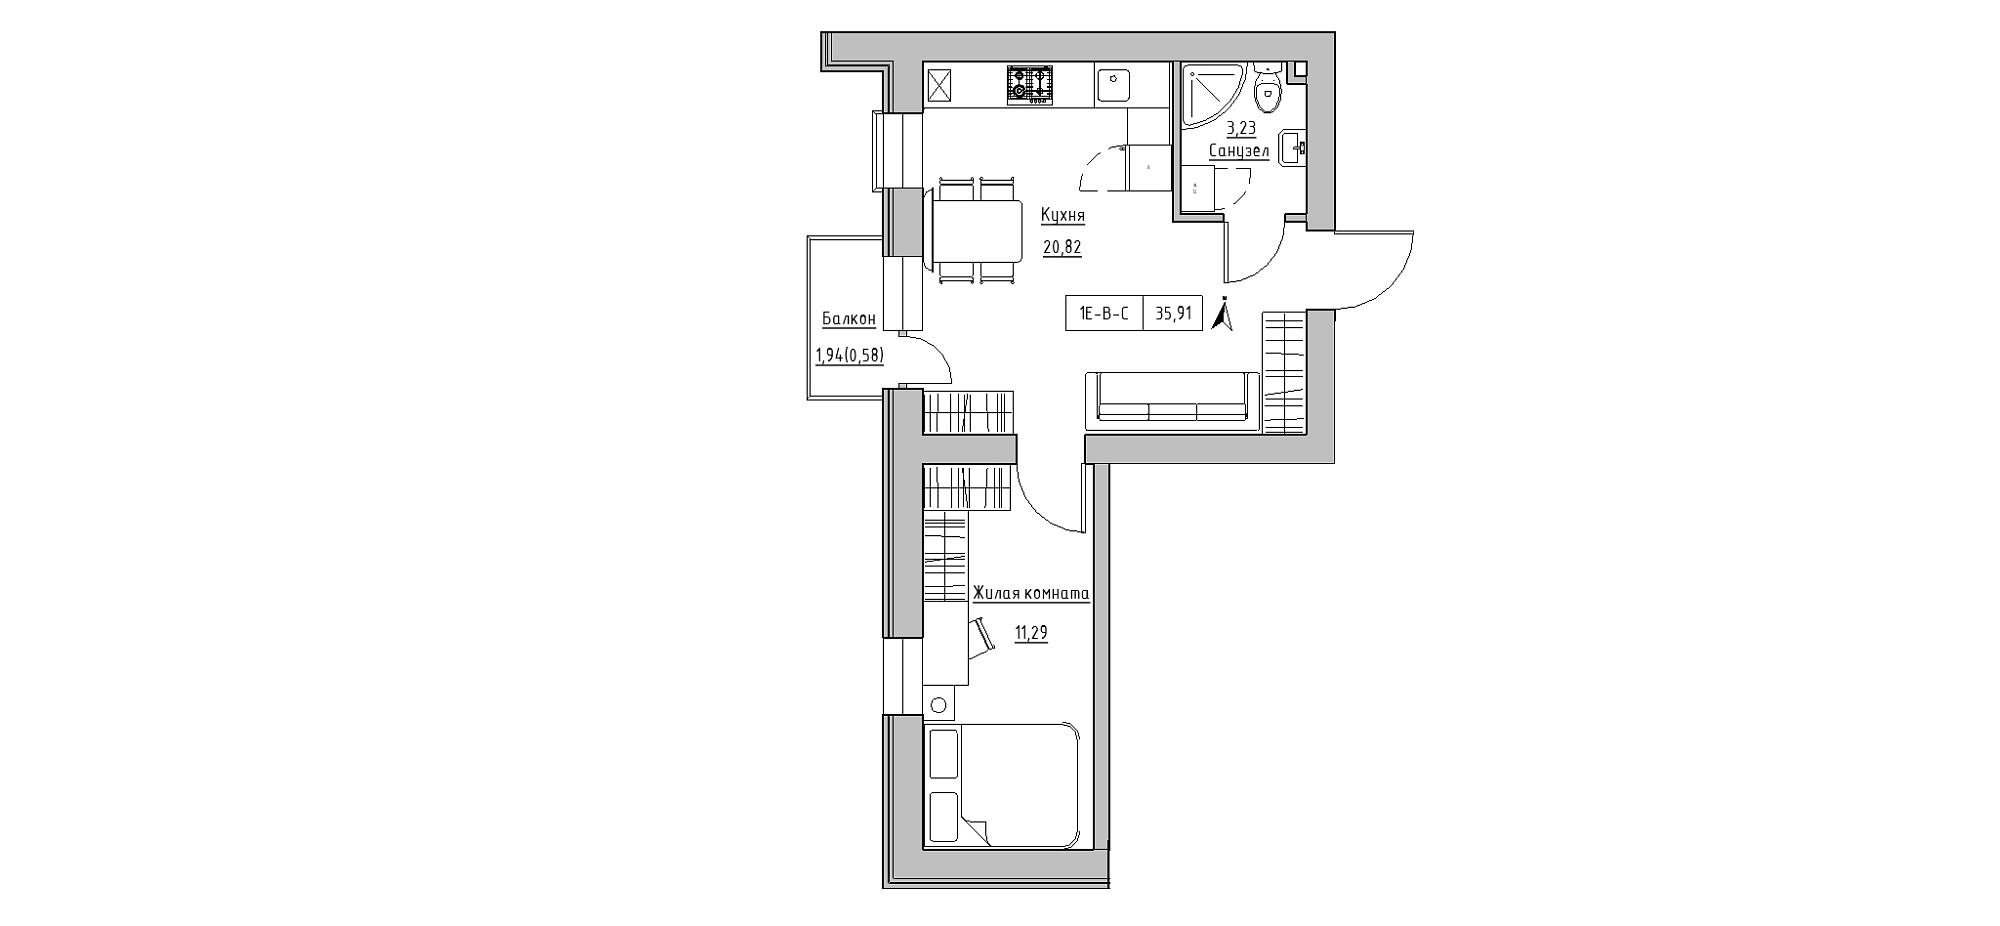 Planning 1-rm flats area 35.91m2, KS-020-02/0009.